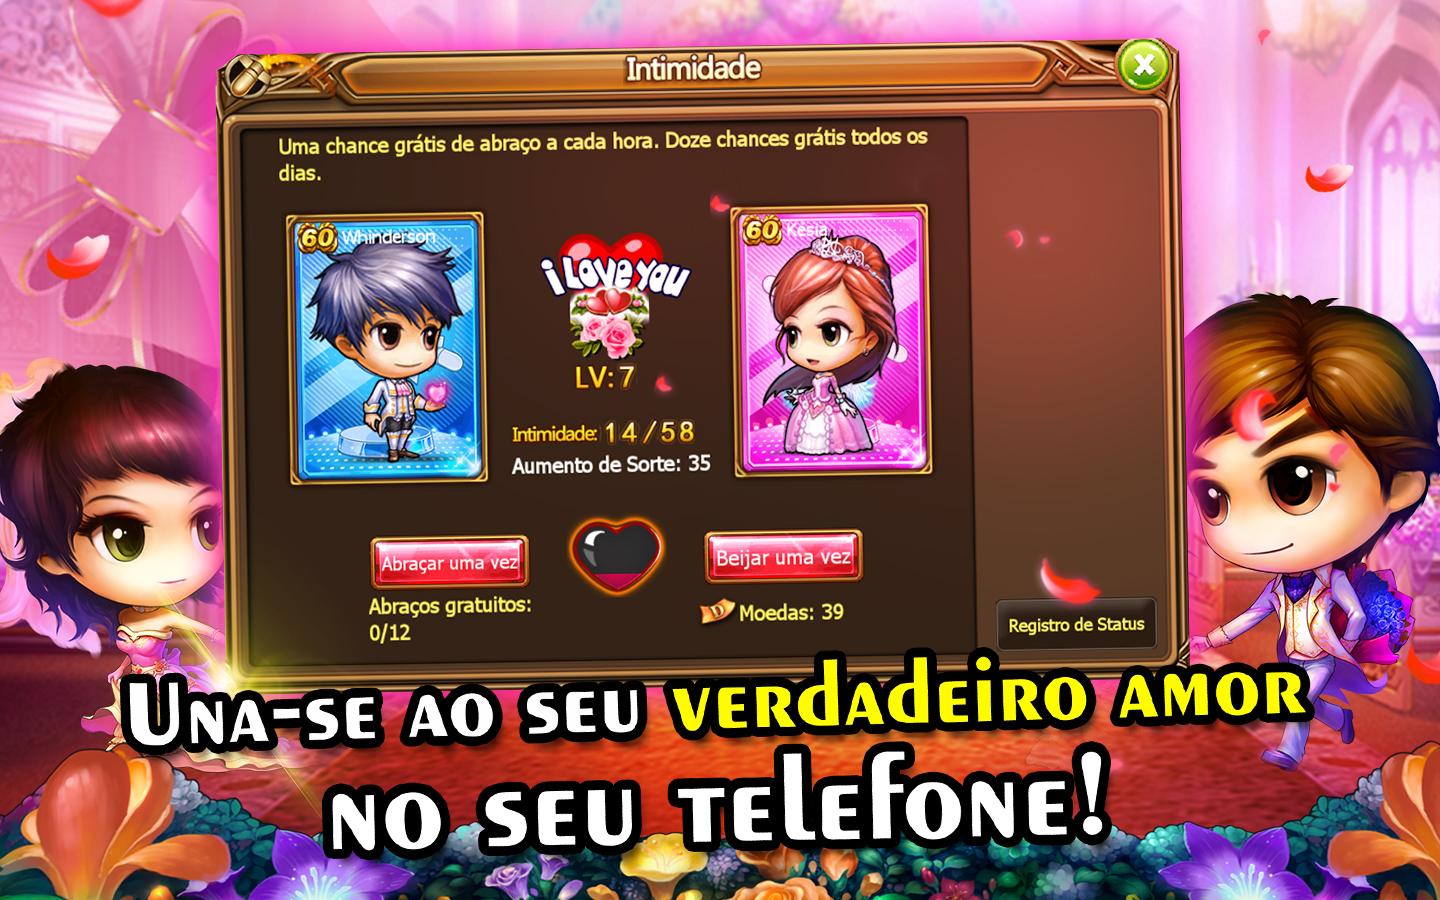 Bomb Me Brasil - Free Multiplayer Jogo de Tiro